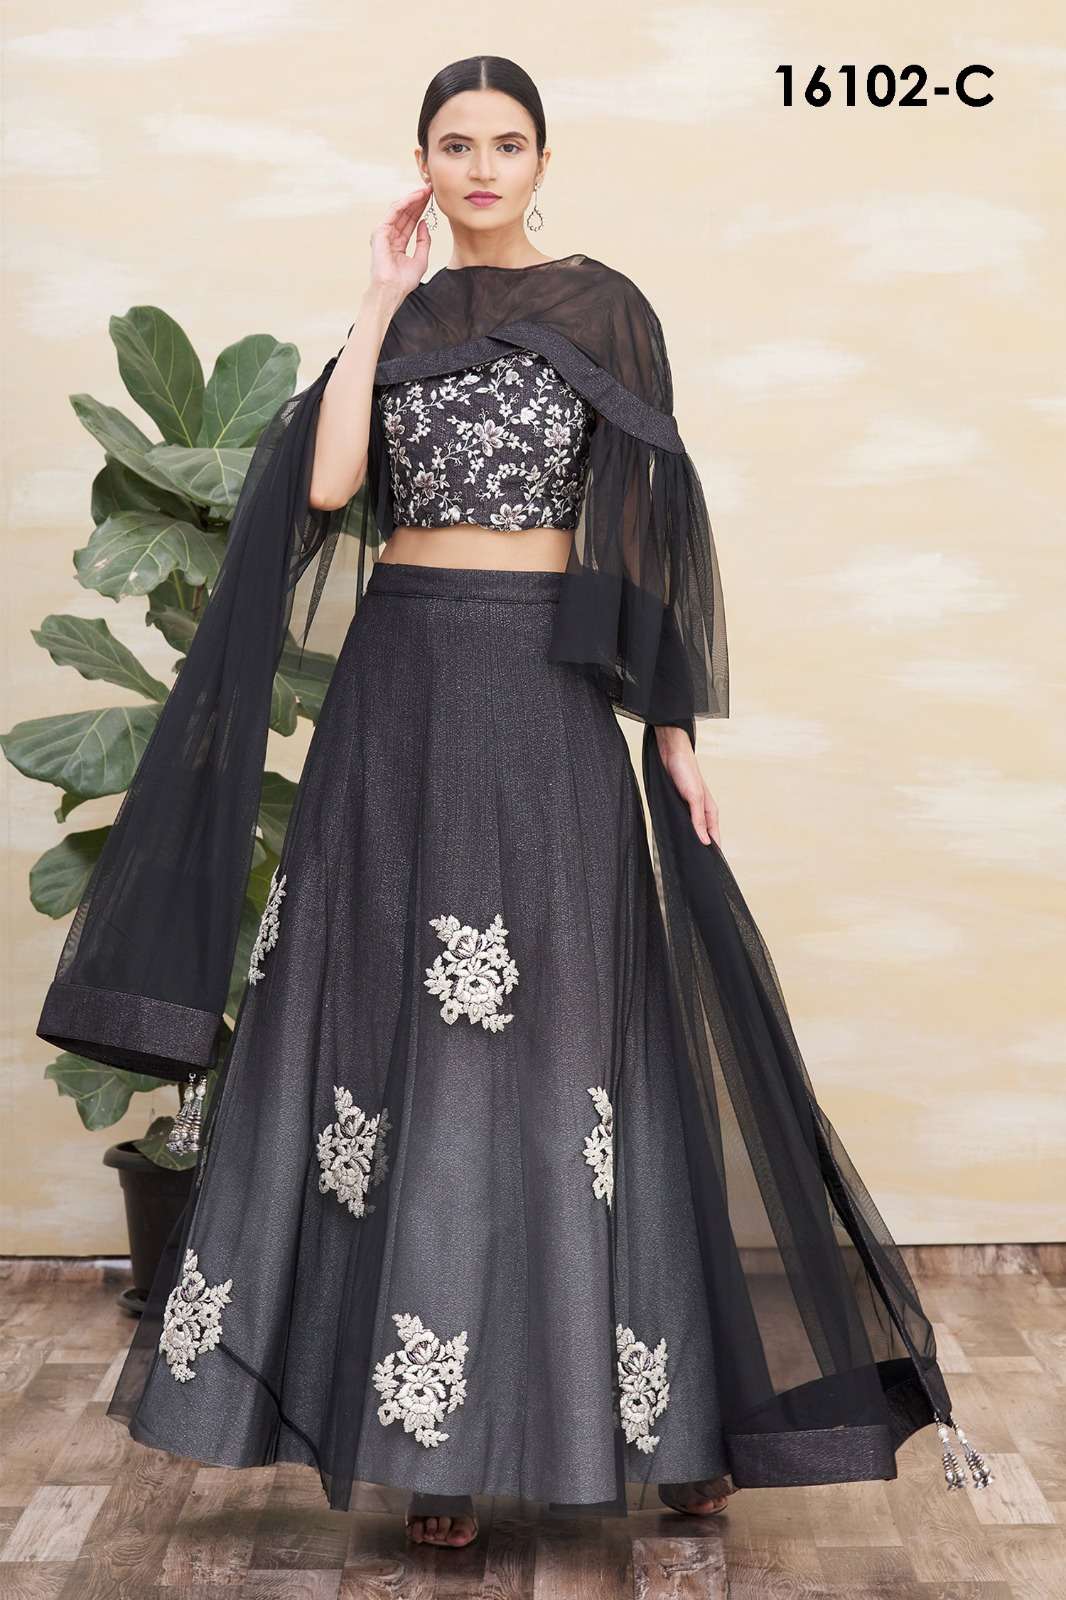 Mahotsav #MohMaya #Indian #Saree #Fashion #Designerwear #Fabric #Wedding |  Designer lehnga choli, Lehenga style saree, Buy designer sarees online